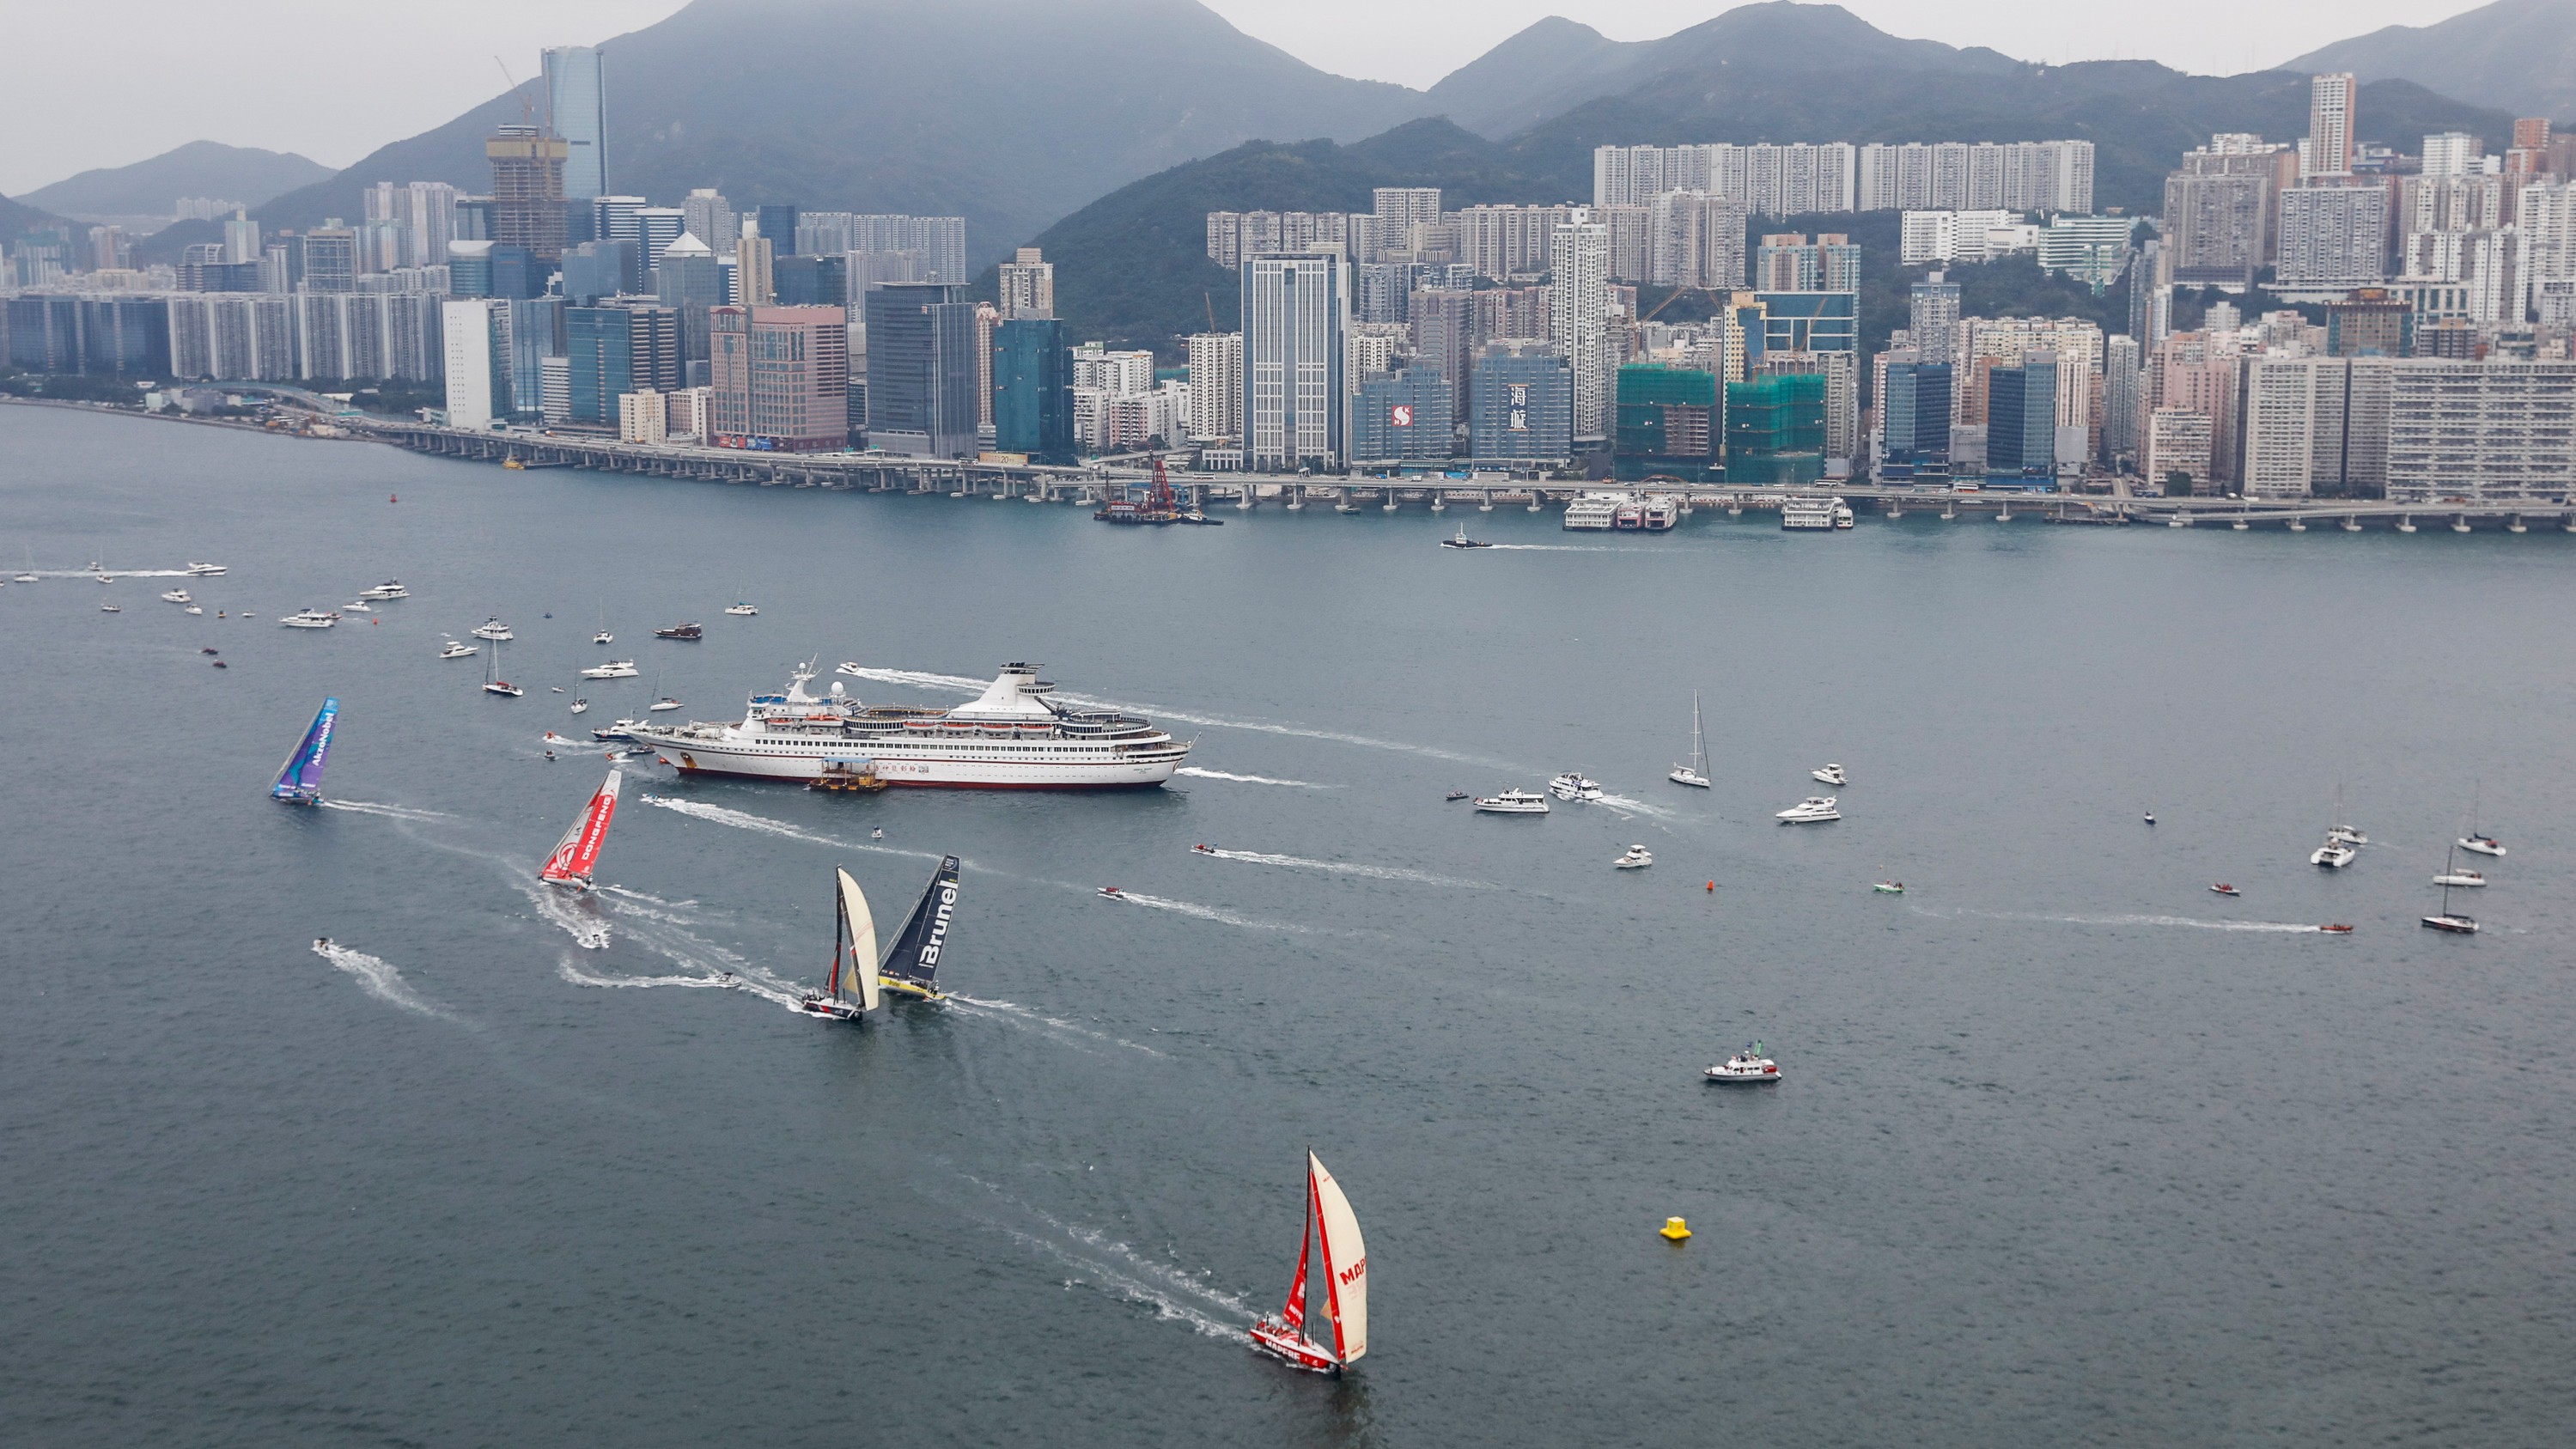 Volvo Ocean Race yachts compete in an in-port race in Victoria Harbour, Hong Kong. Photo: Ainhoa Sanchez/Volvo Ocean Race